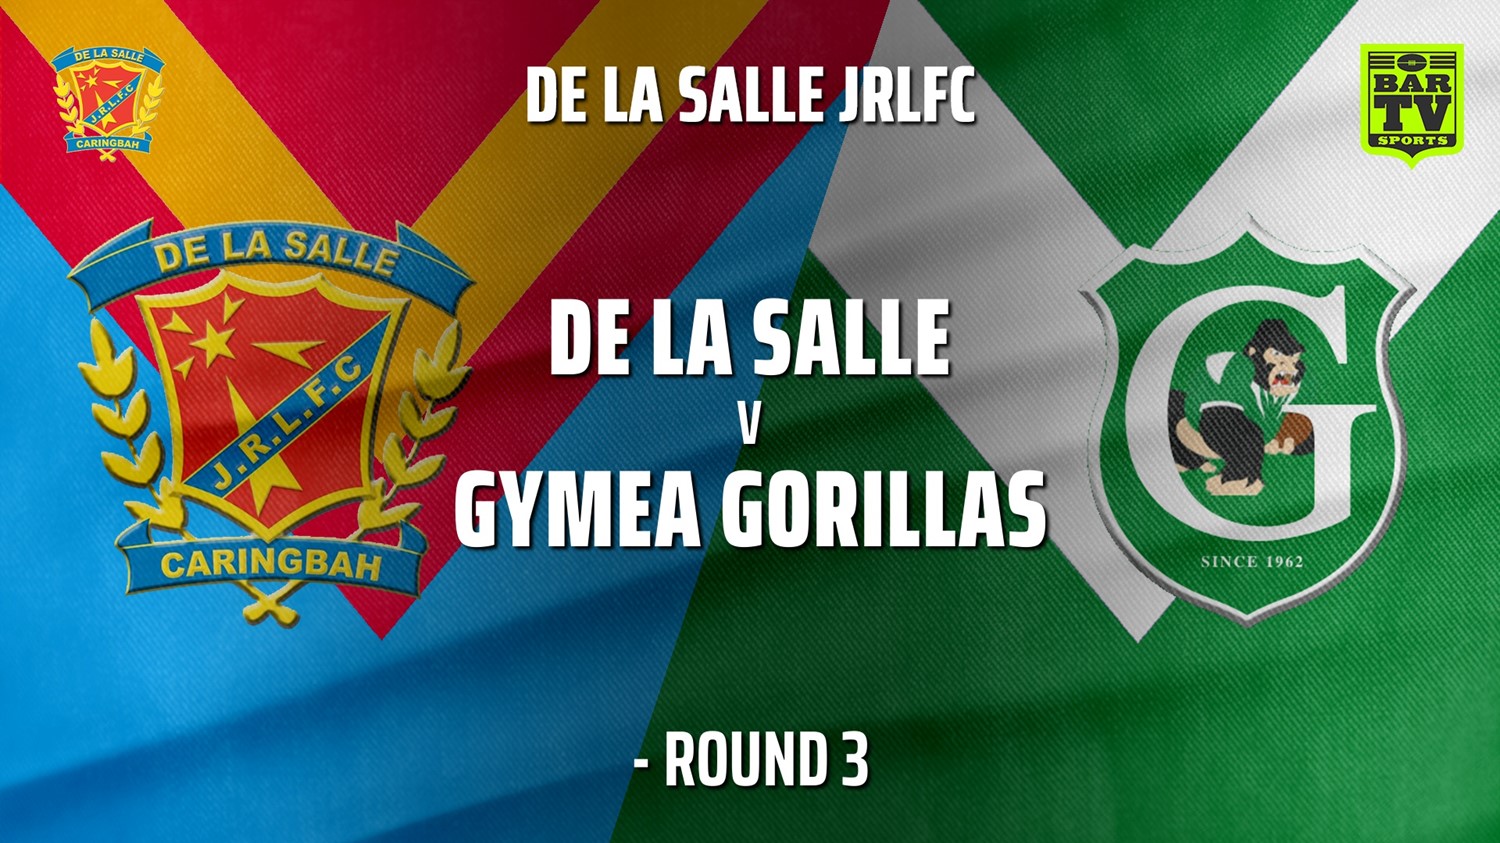 210516-De La Salle- Southern Under 16s Silver - Round 3 - De La Salle v Gymea Gorillas Slate Image